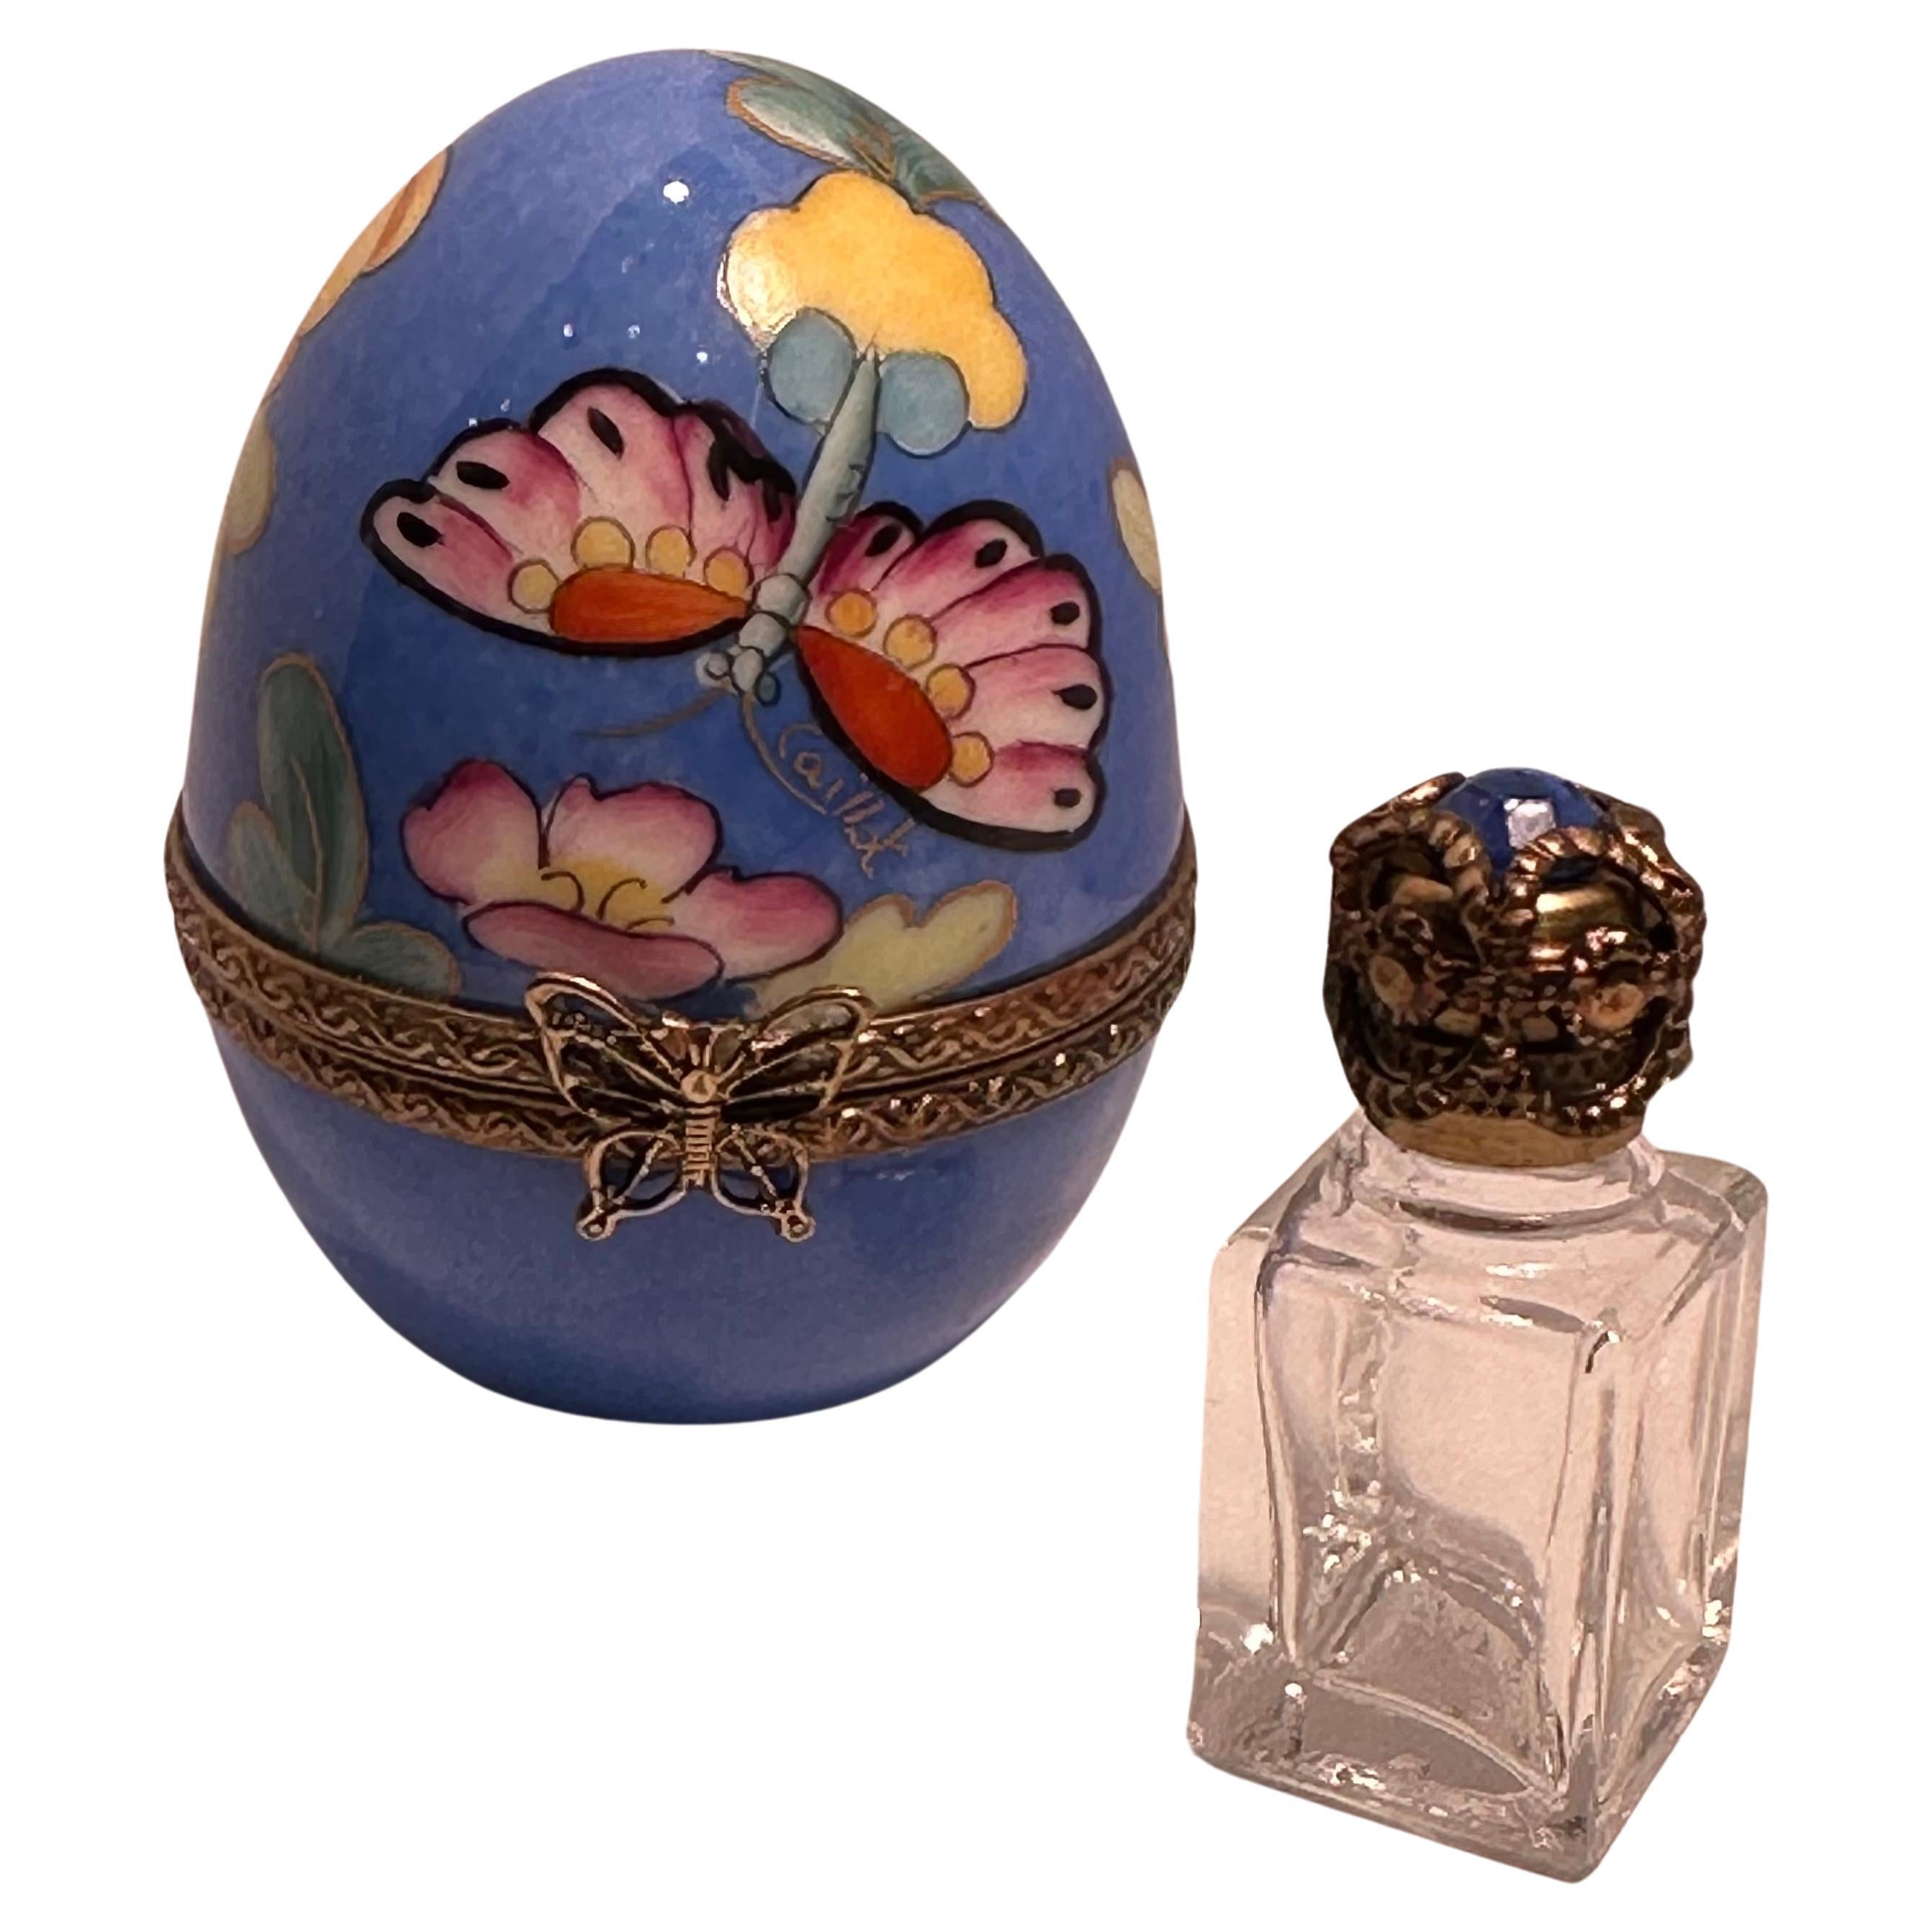 Exquisite Limoges France Polychrome Porcelain Egg with Perfume Bottle Inside